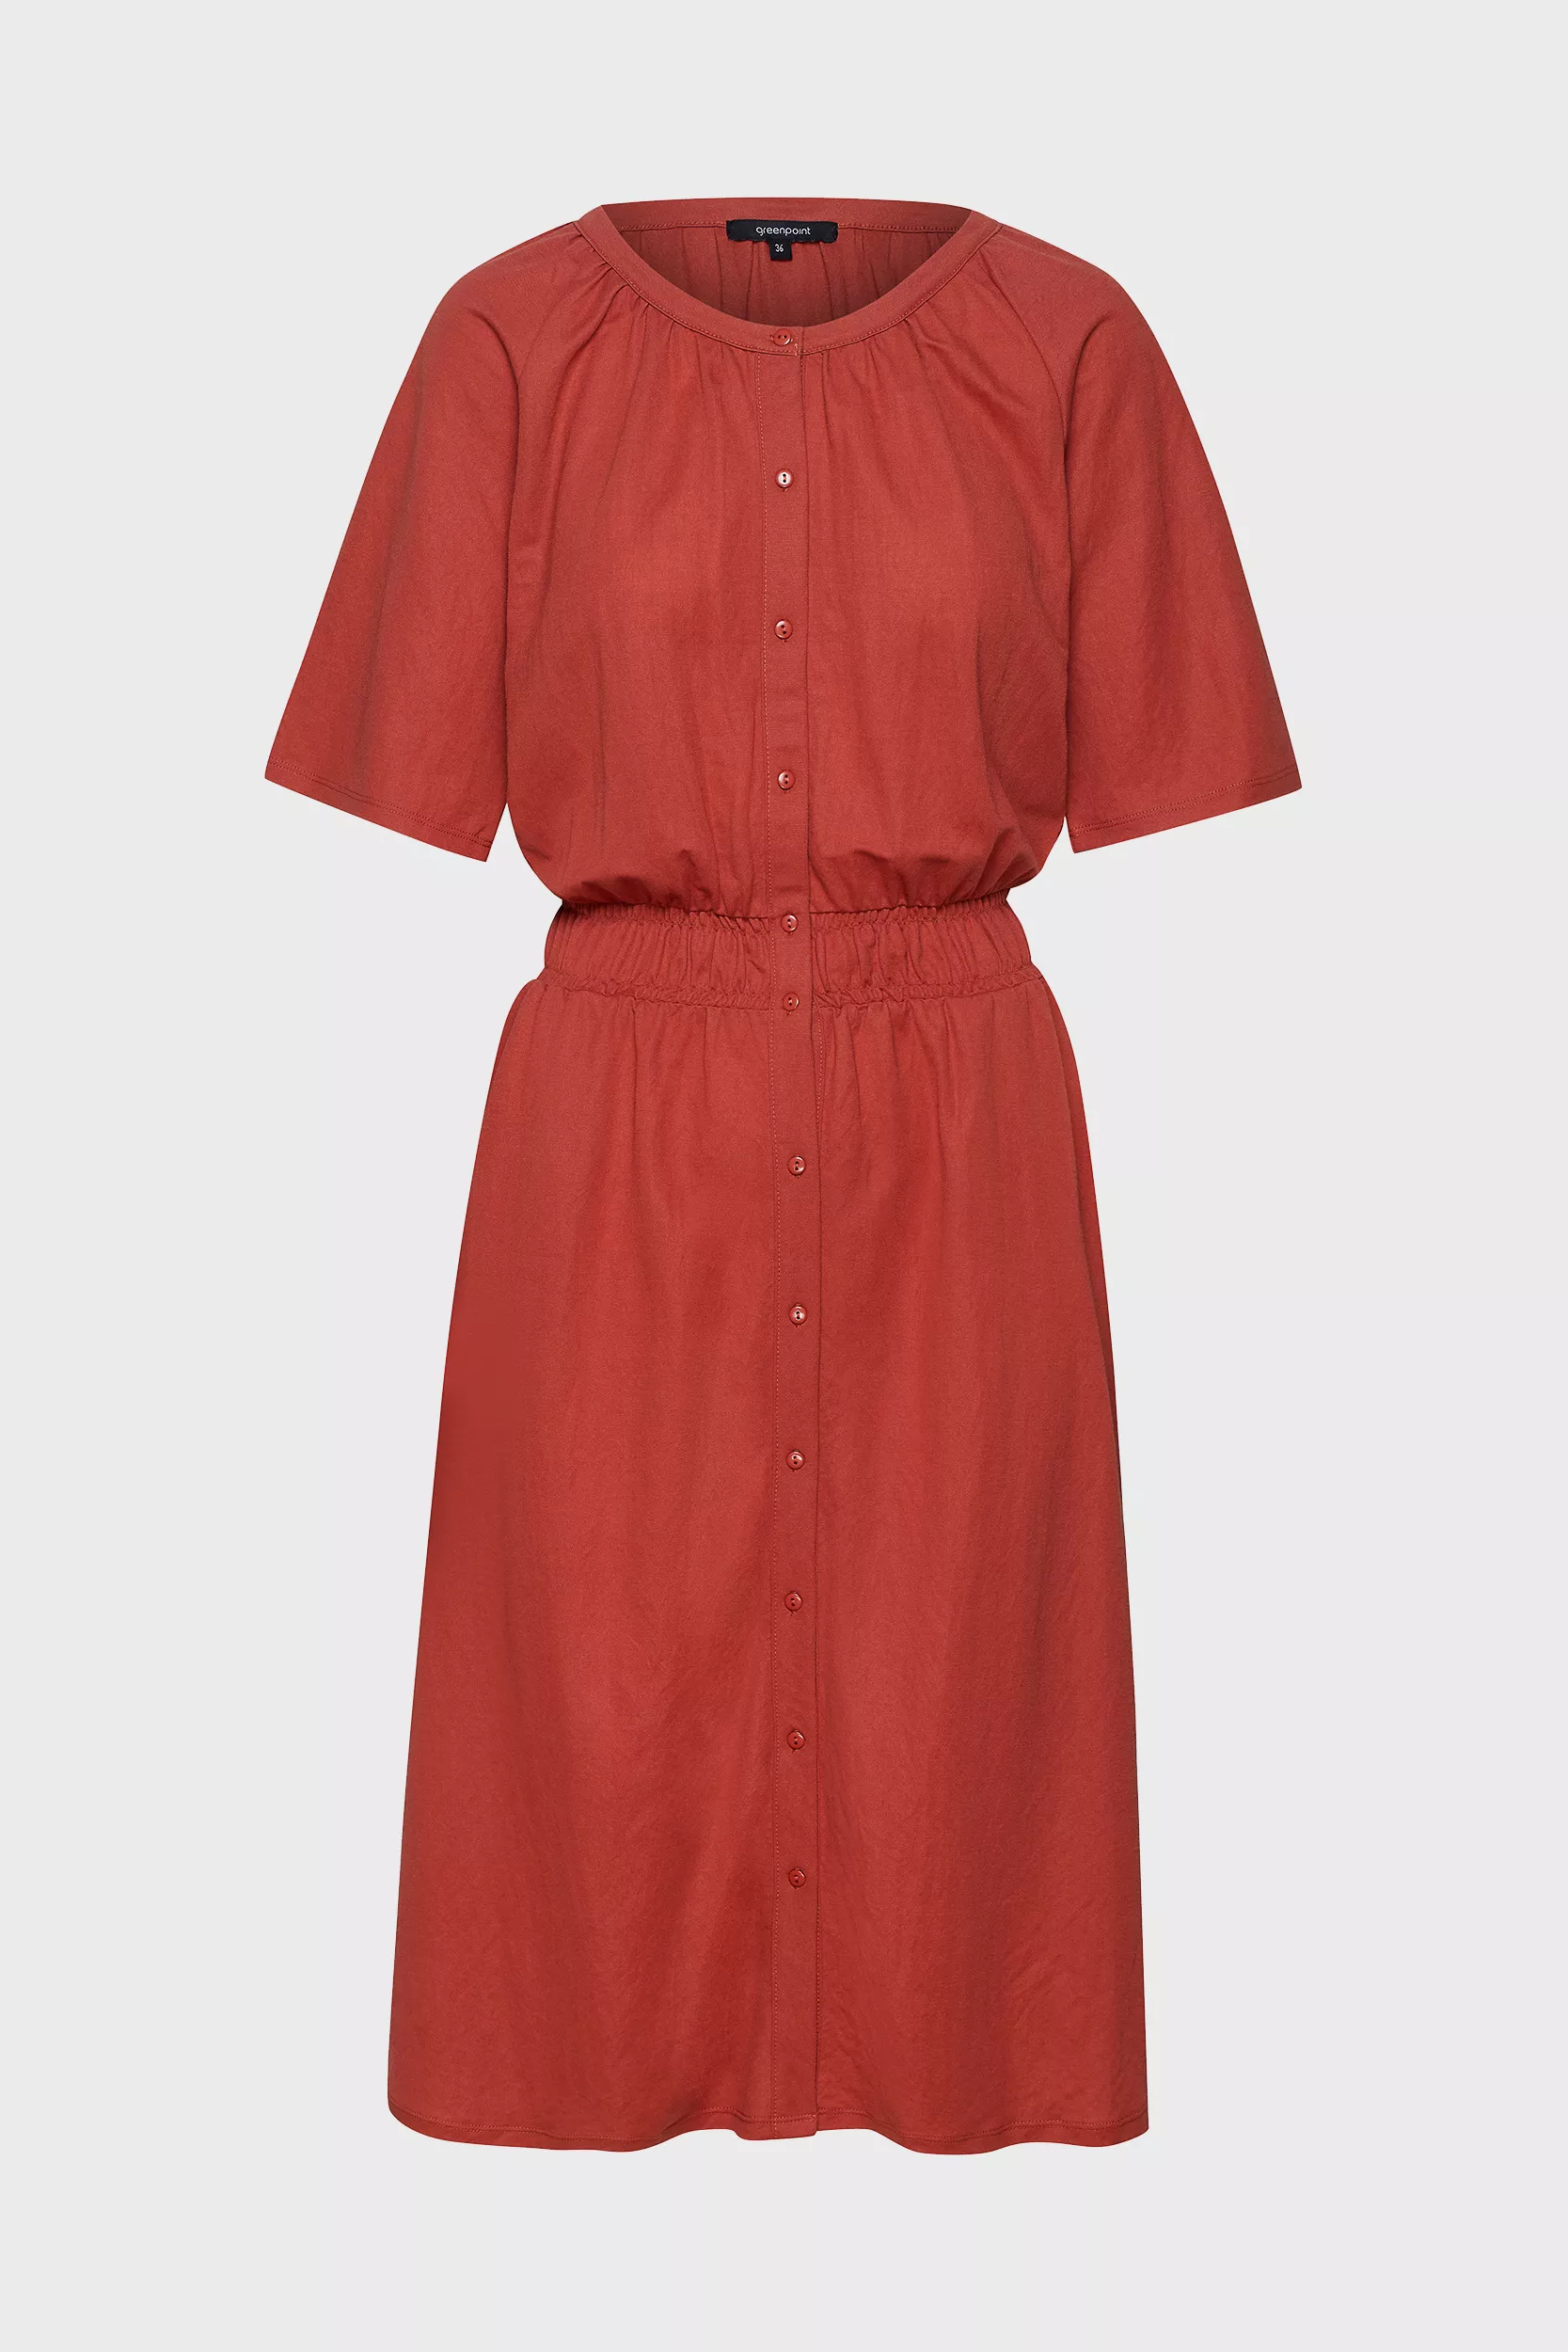 Greenpoint Woman's Dress